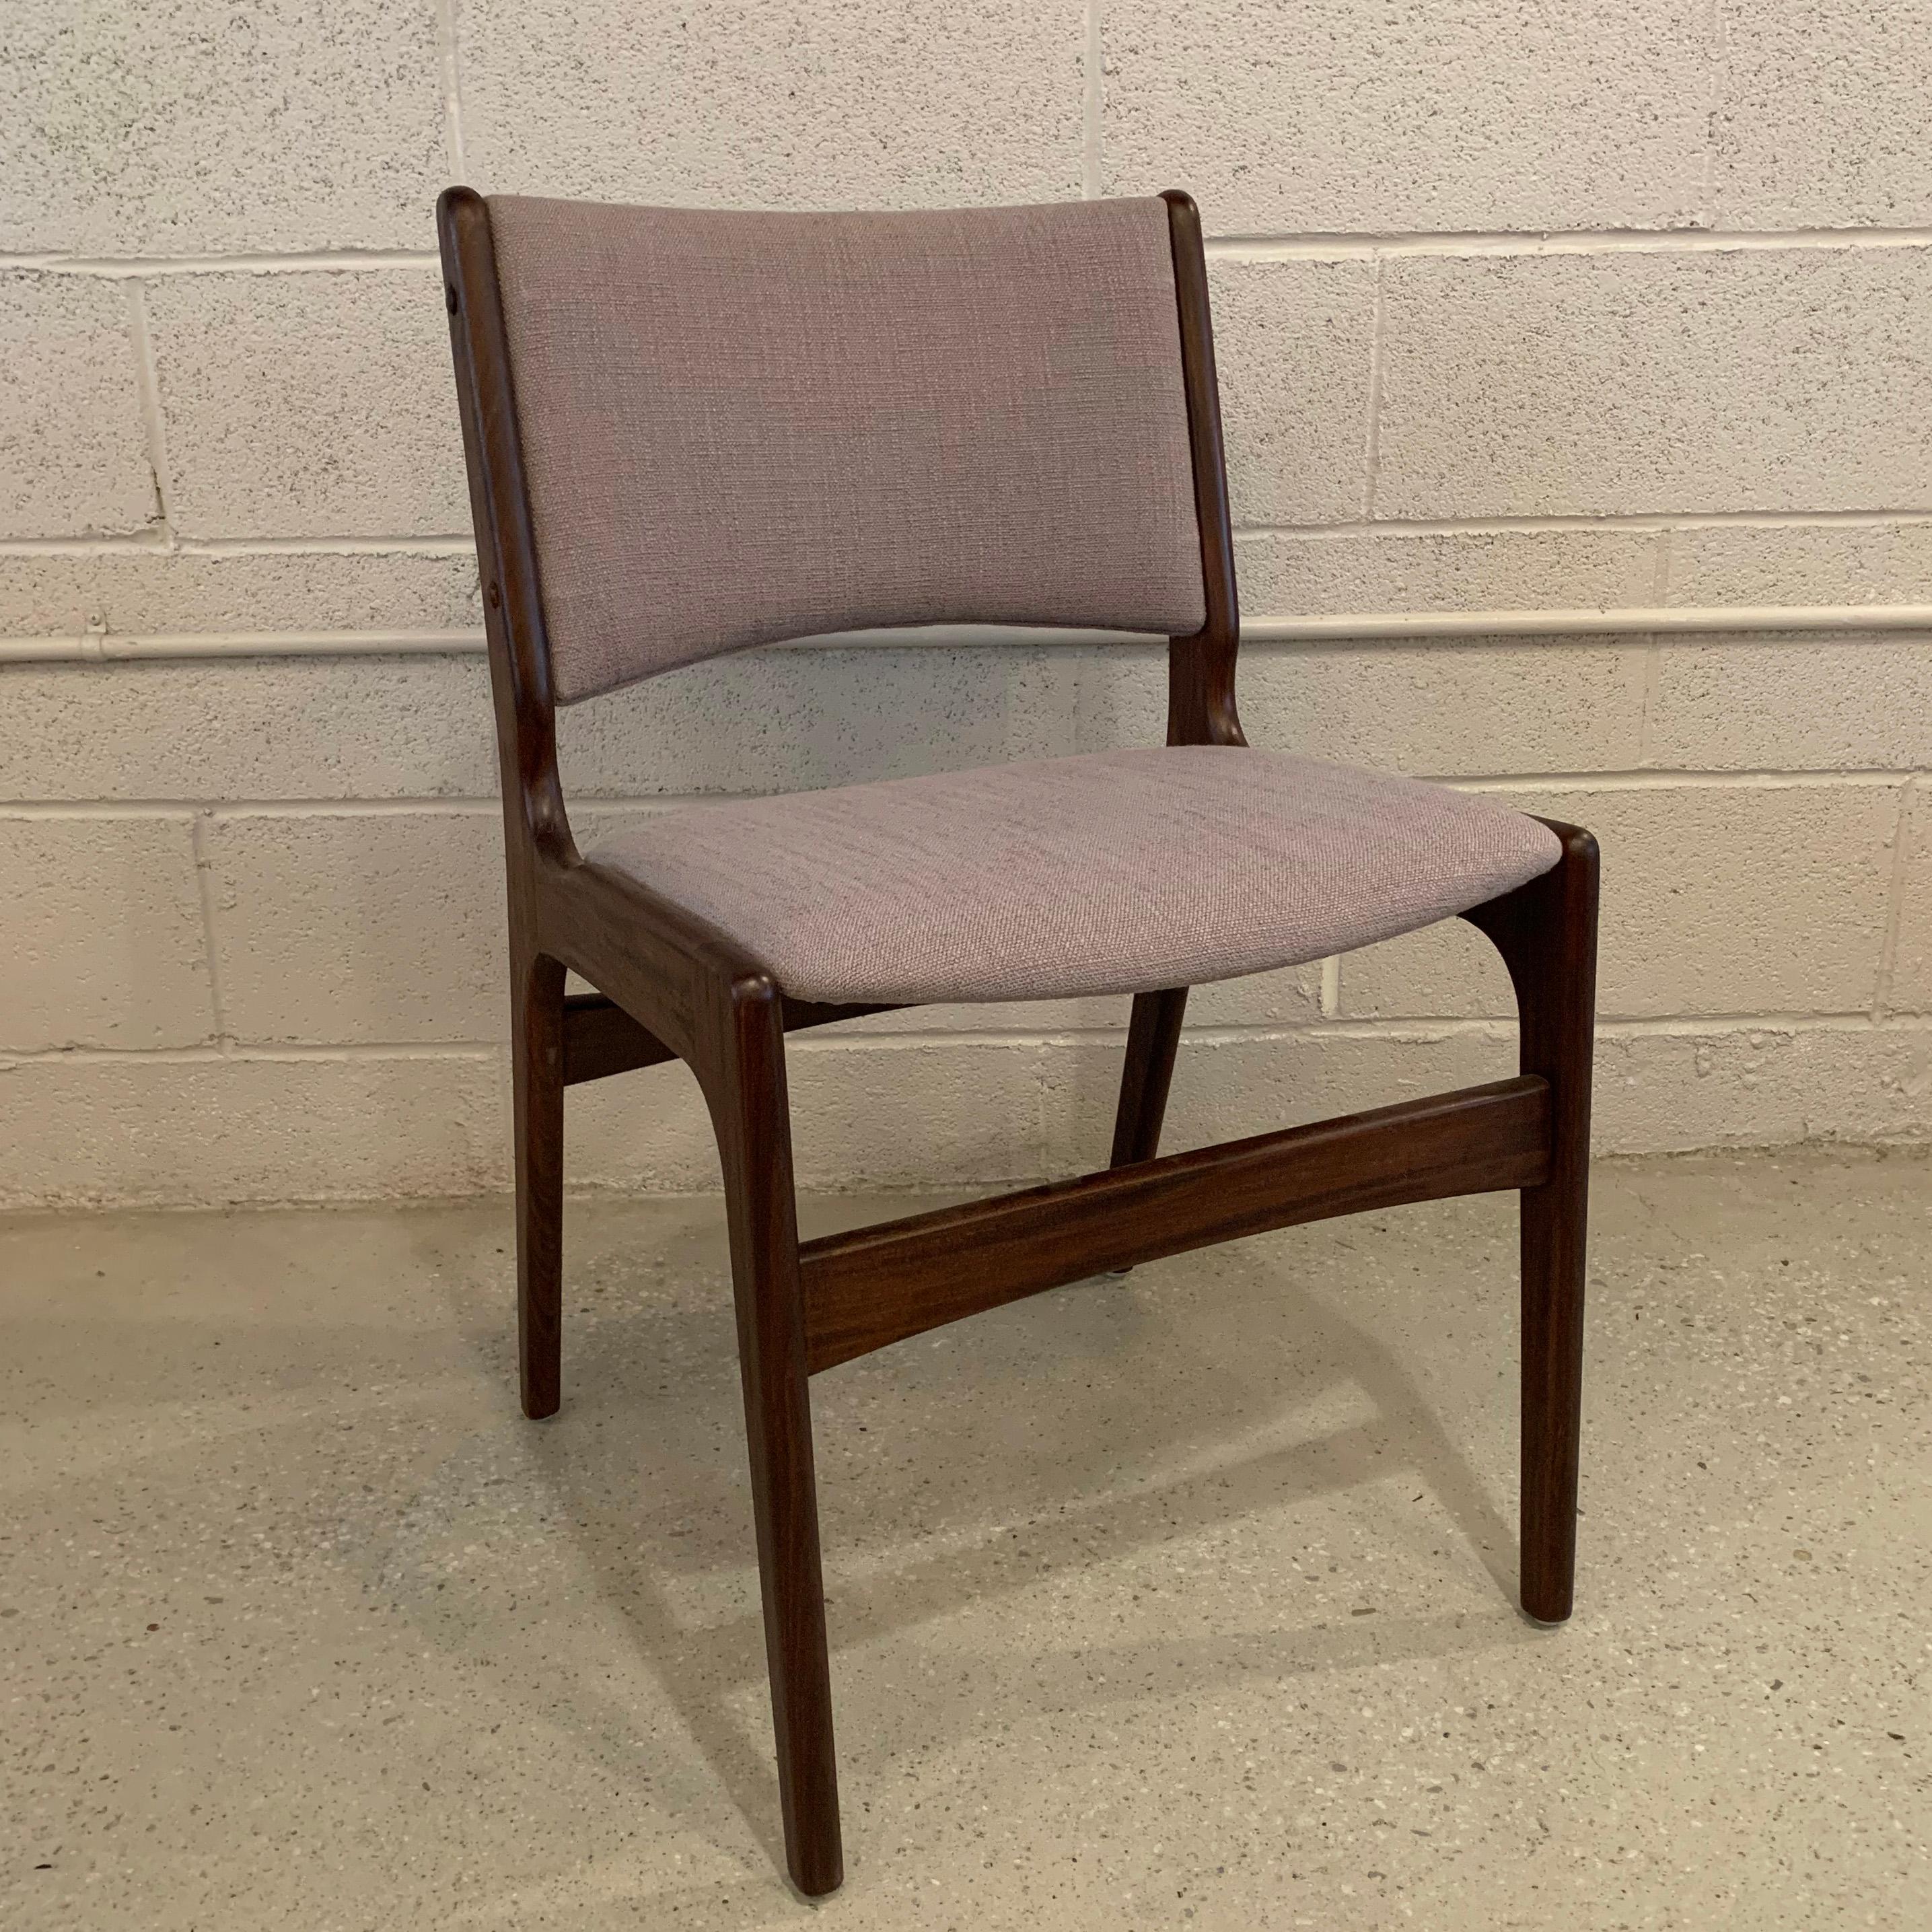 Scandinavian Modern, teak, dining or desk, side chair by Henning Kjaernulf is newly upholstered in gray woven cotton linen blend.